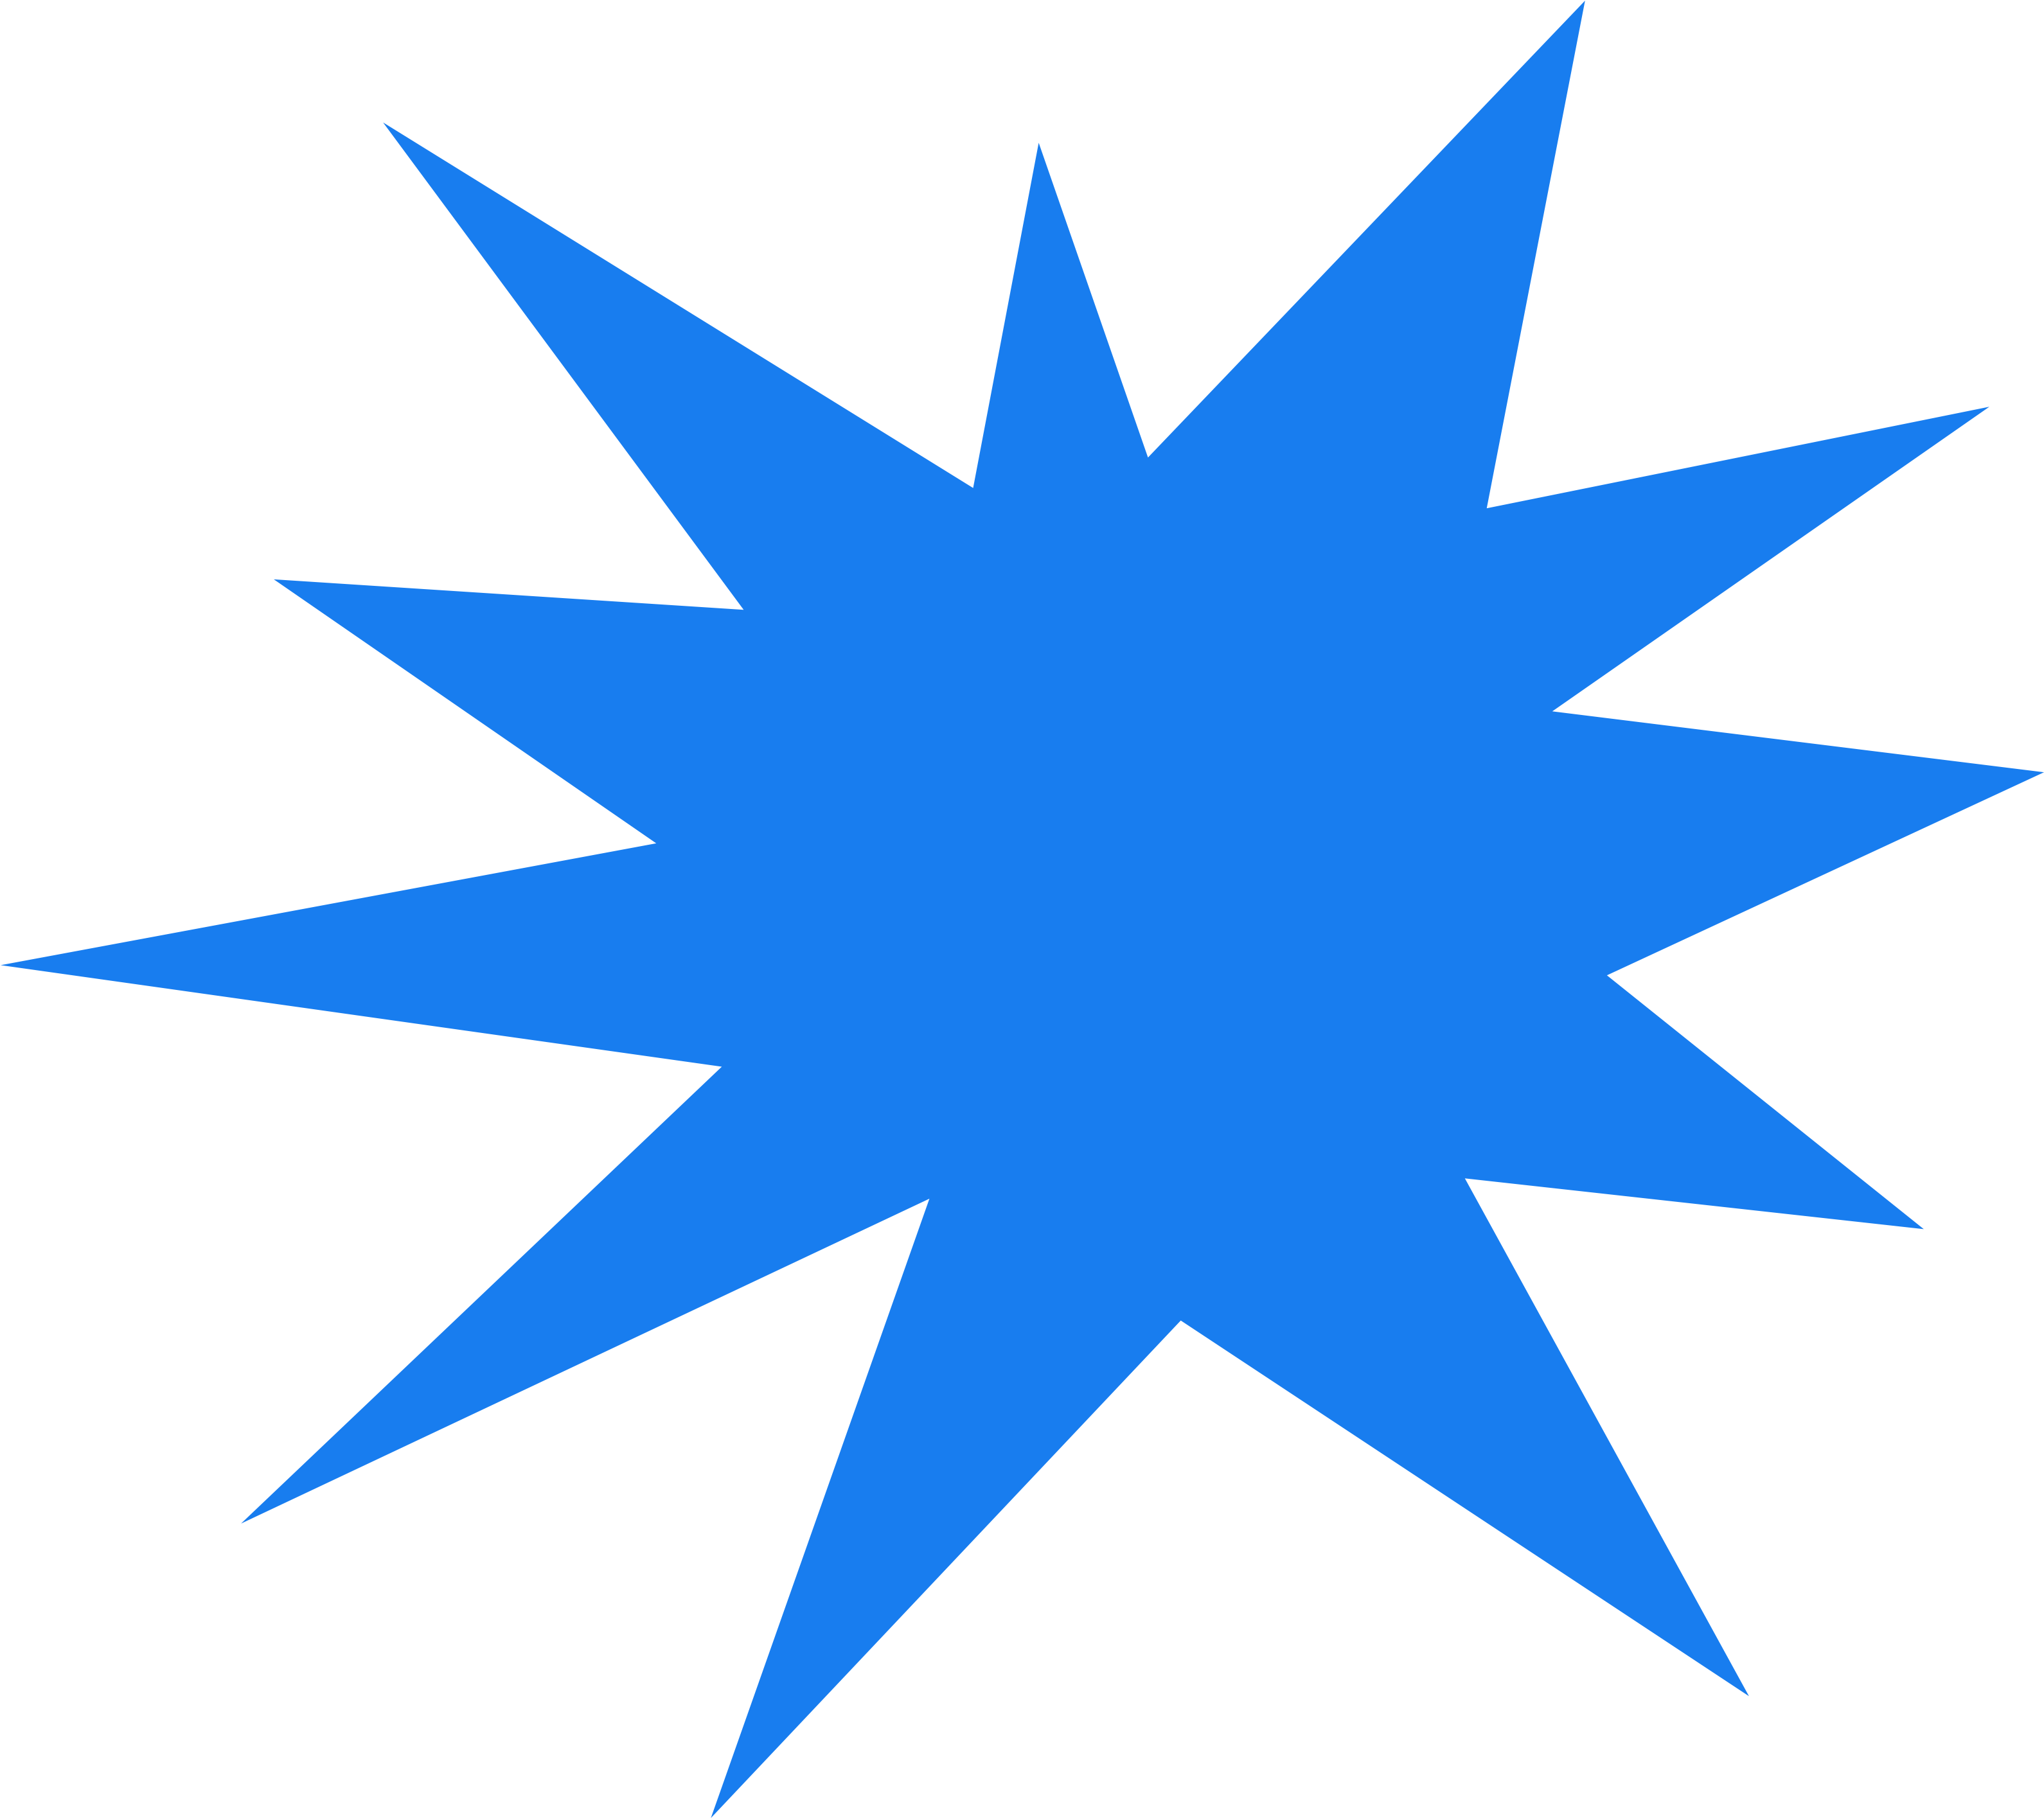 A Blue Starburst On A Black Background